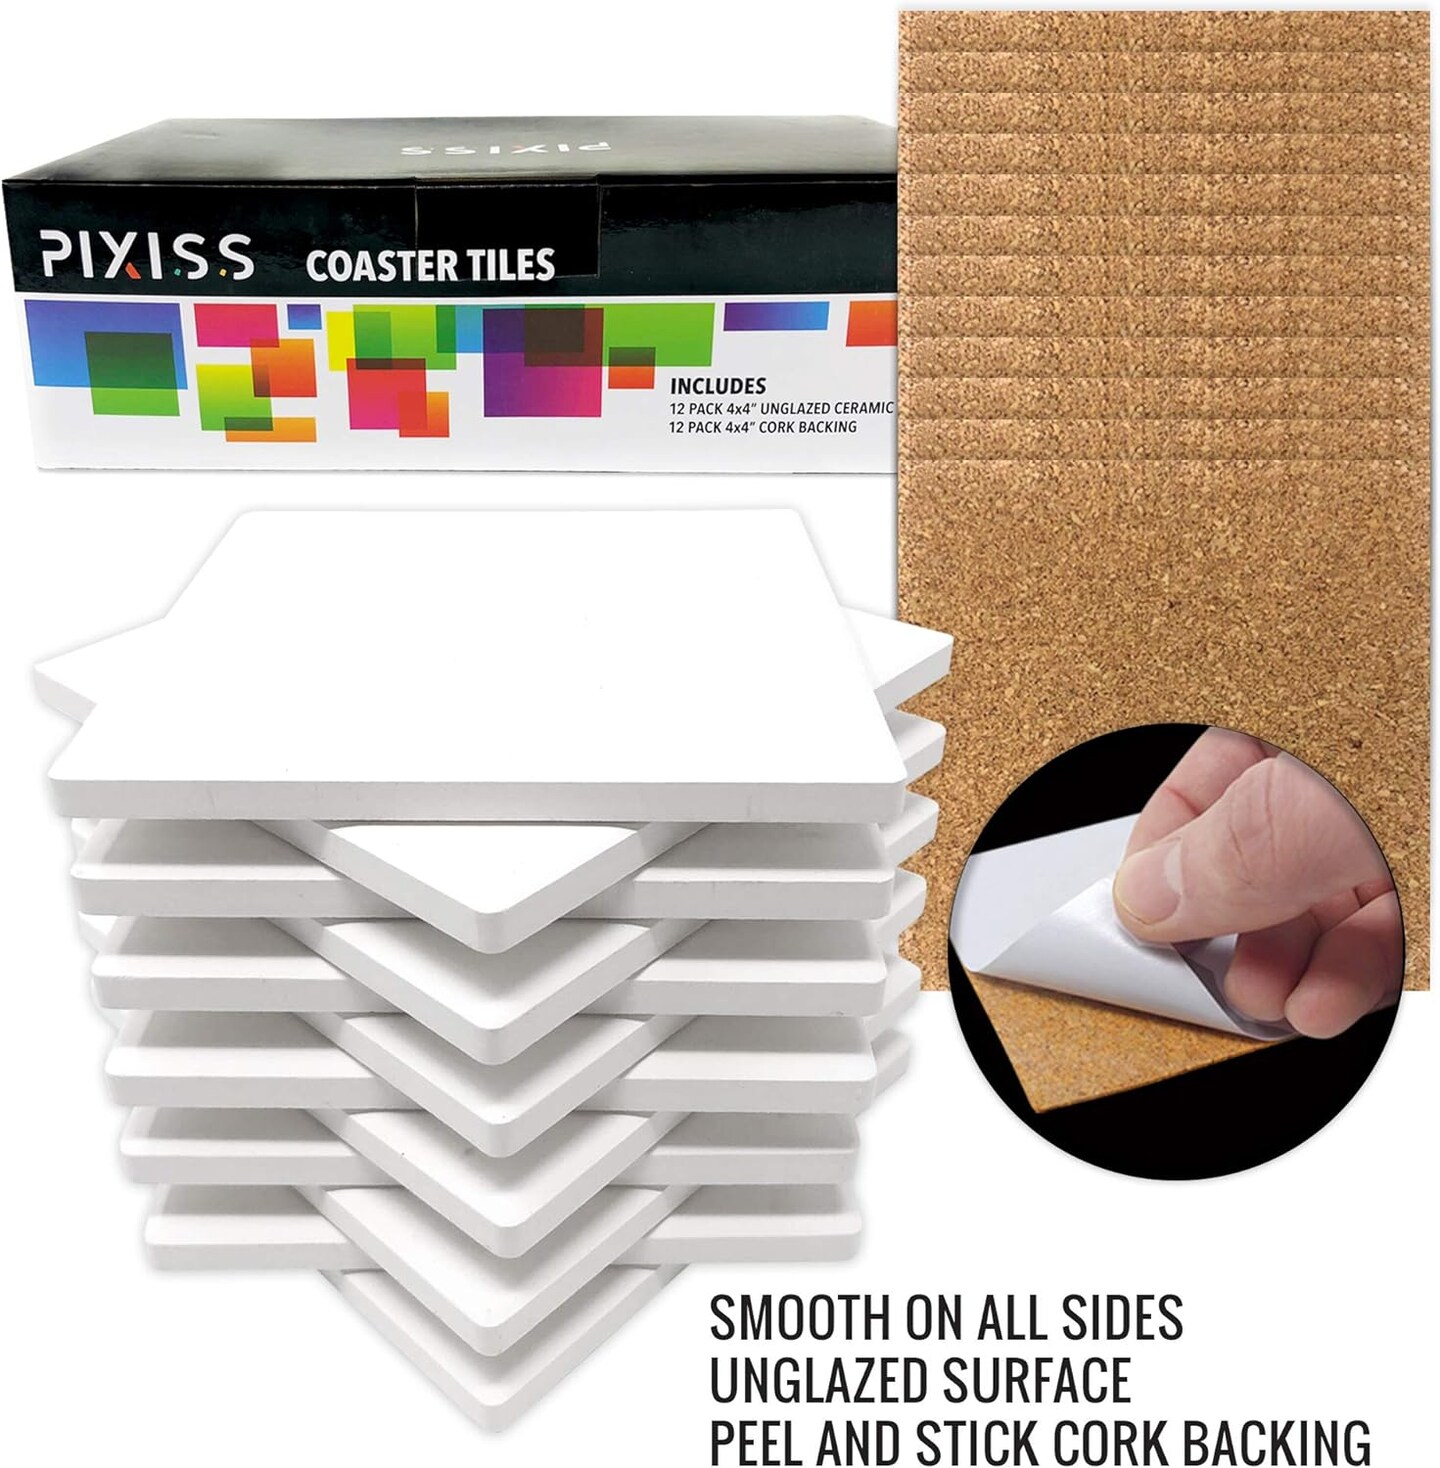 Ceramic Tiles for Crafts Coasters Kit, 12 Ceramic White Tiles, Cork Backing Pads, 16 Reusable Craft Stencils, Acrylic Paint, Paint Pallet, Brushes, Pallet Tile Coaster Pouring Bundle